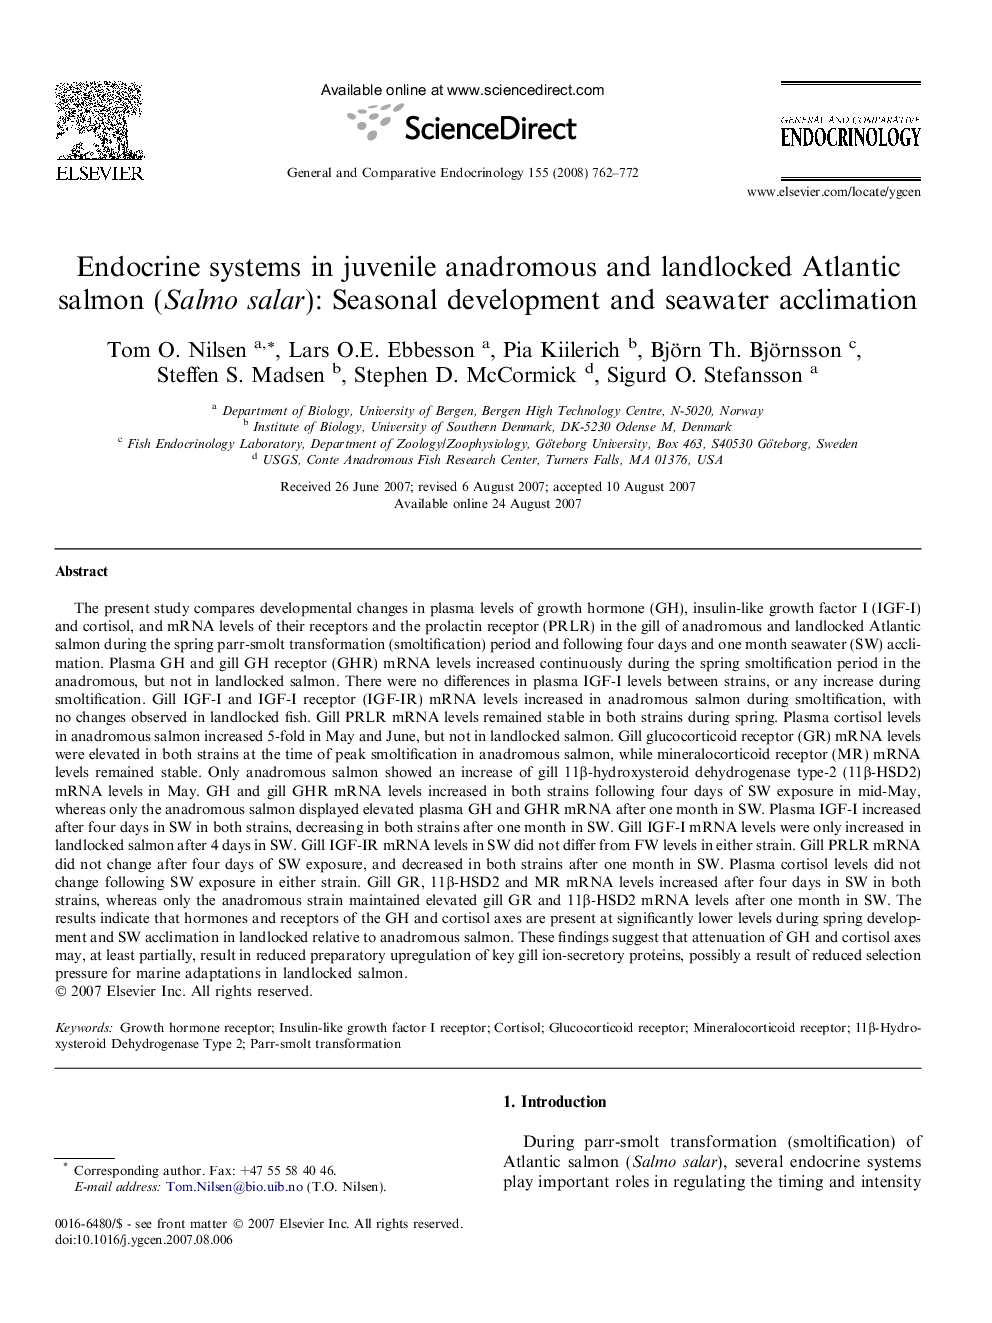 Endocrine systems in juvenile anadromous and landlocked Atlantic salmon (Salmo salar): Seasonal development and seawater acclimation